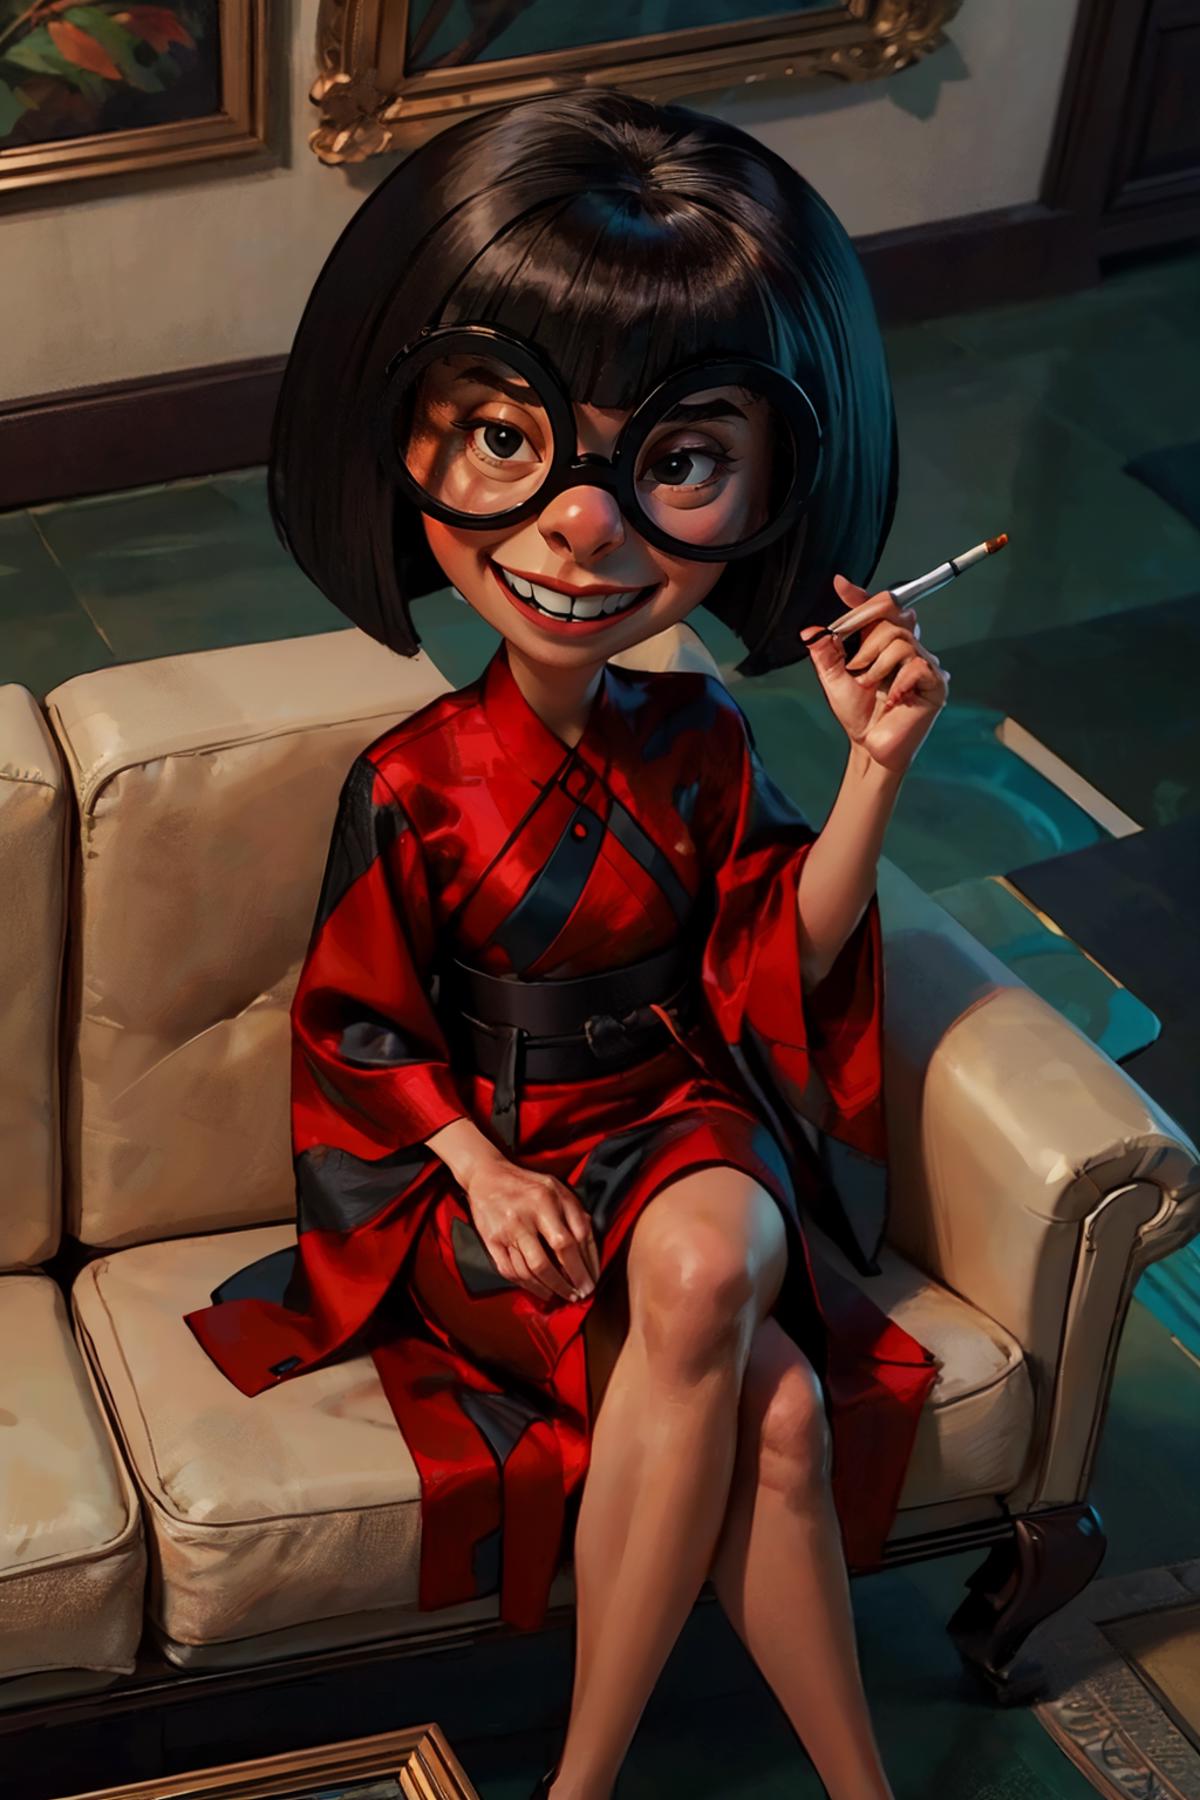 Edna - The Incredibles  (GILF) image by wikkitikki